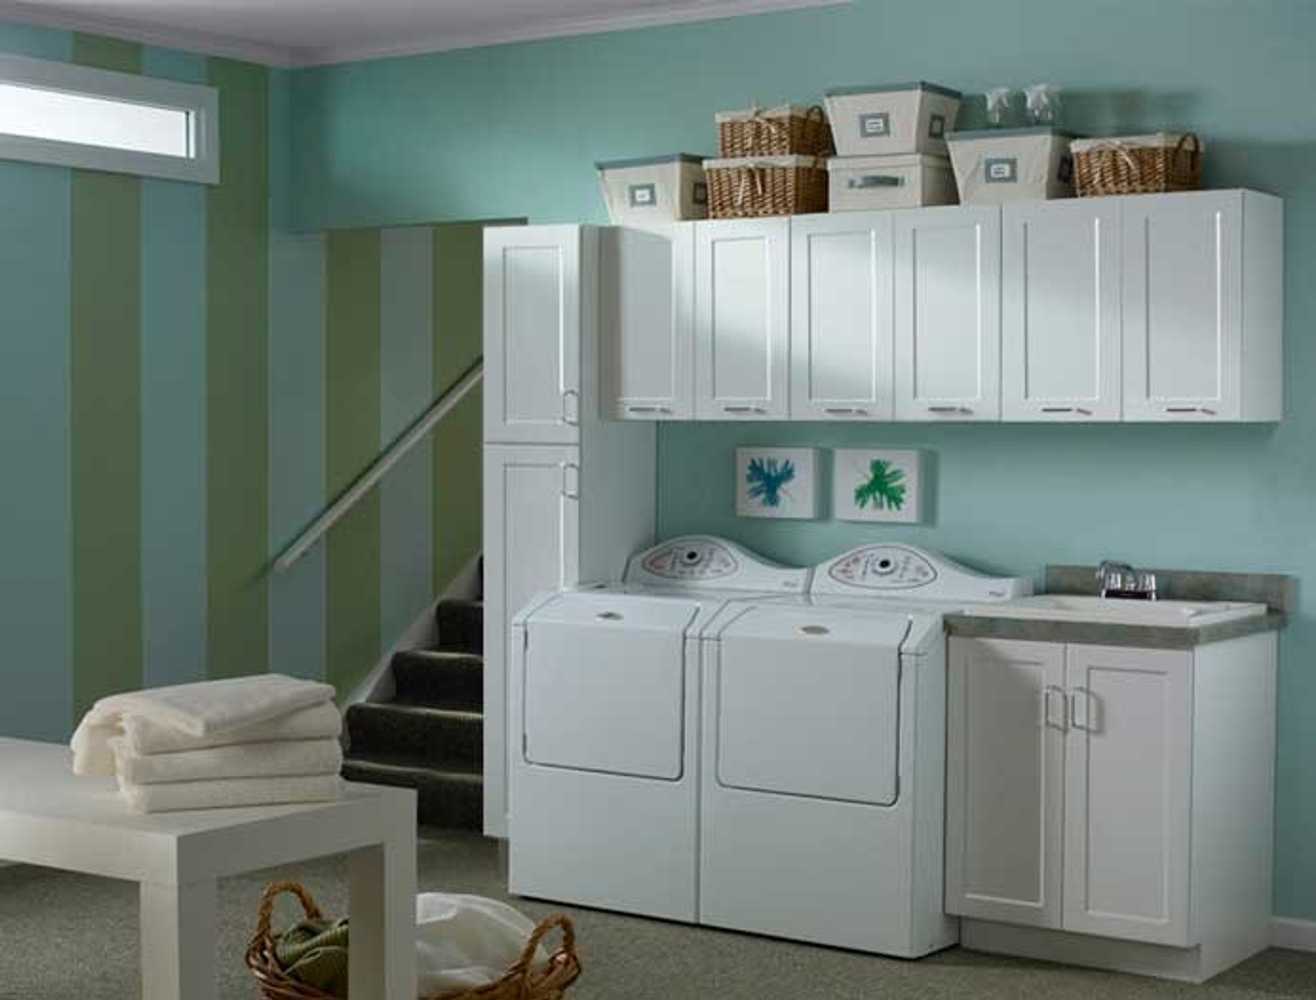 Laundry Room Inspiration from @designREMODEL